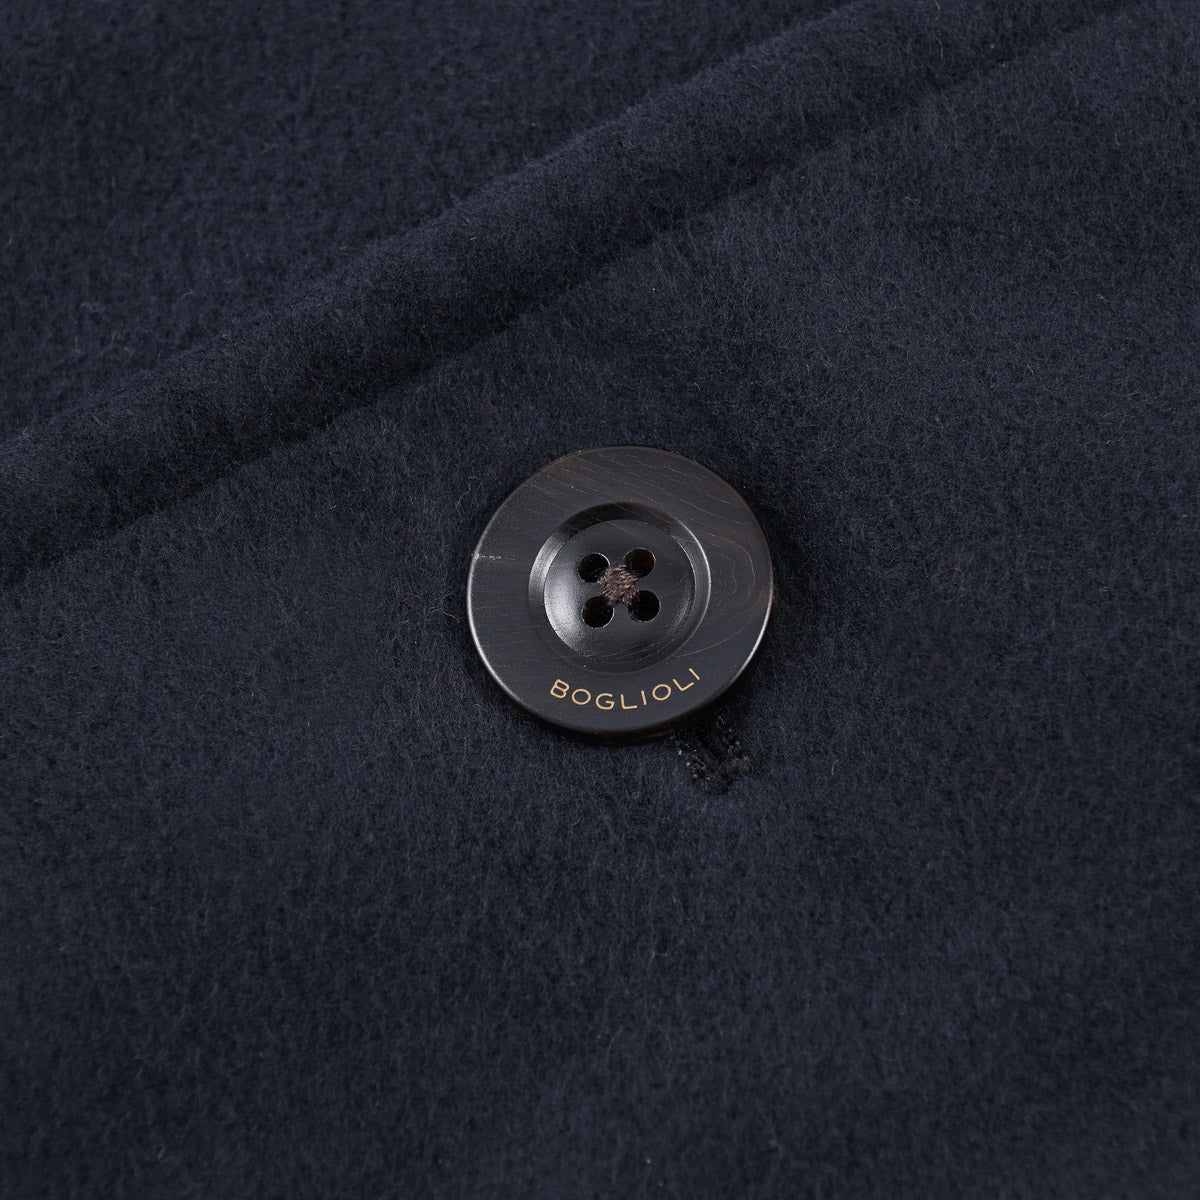 Boglioli Brushed Moleskin Cotton Overcoat - Top Shelf Apparel